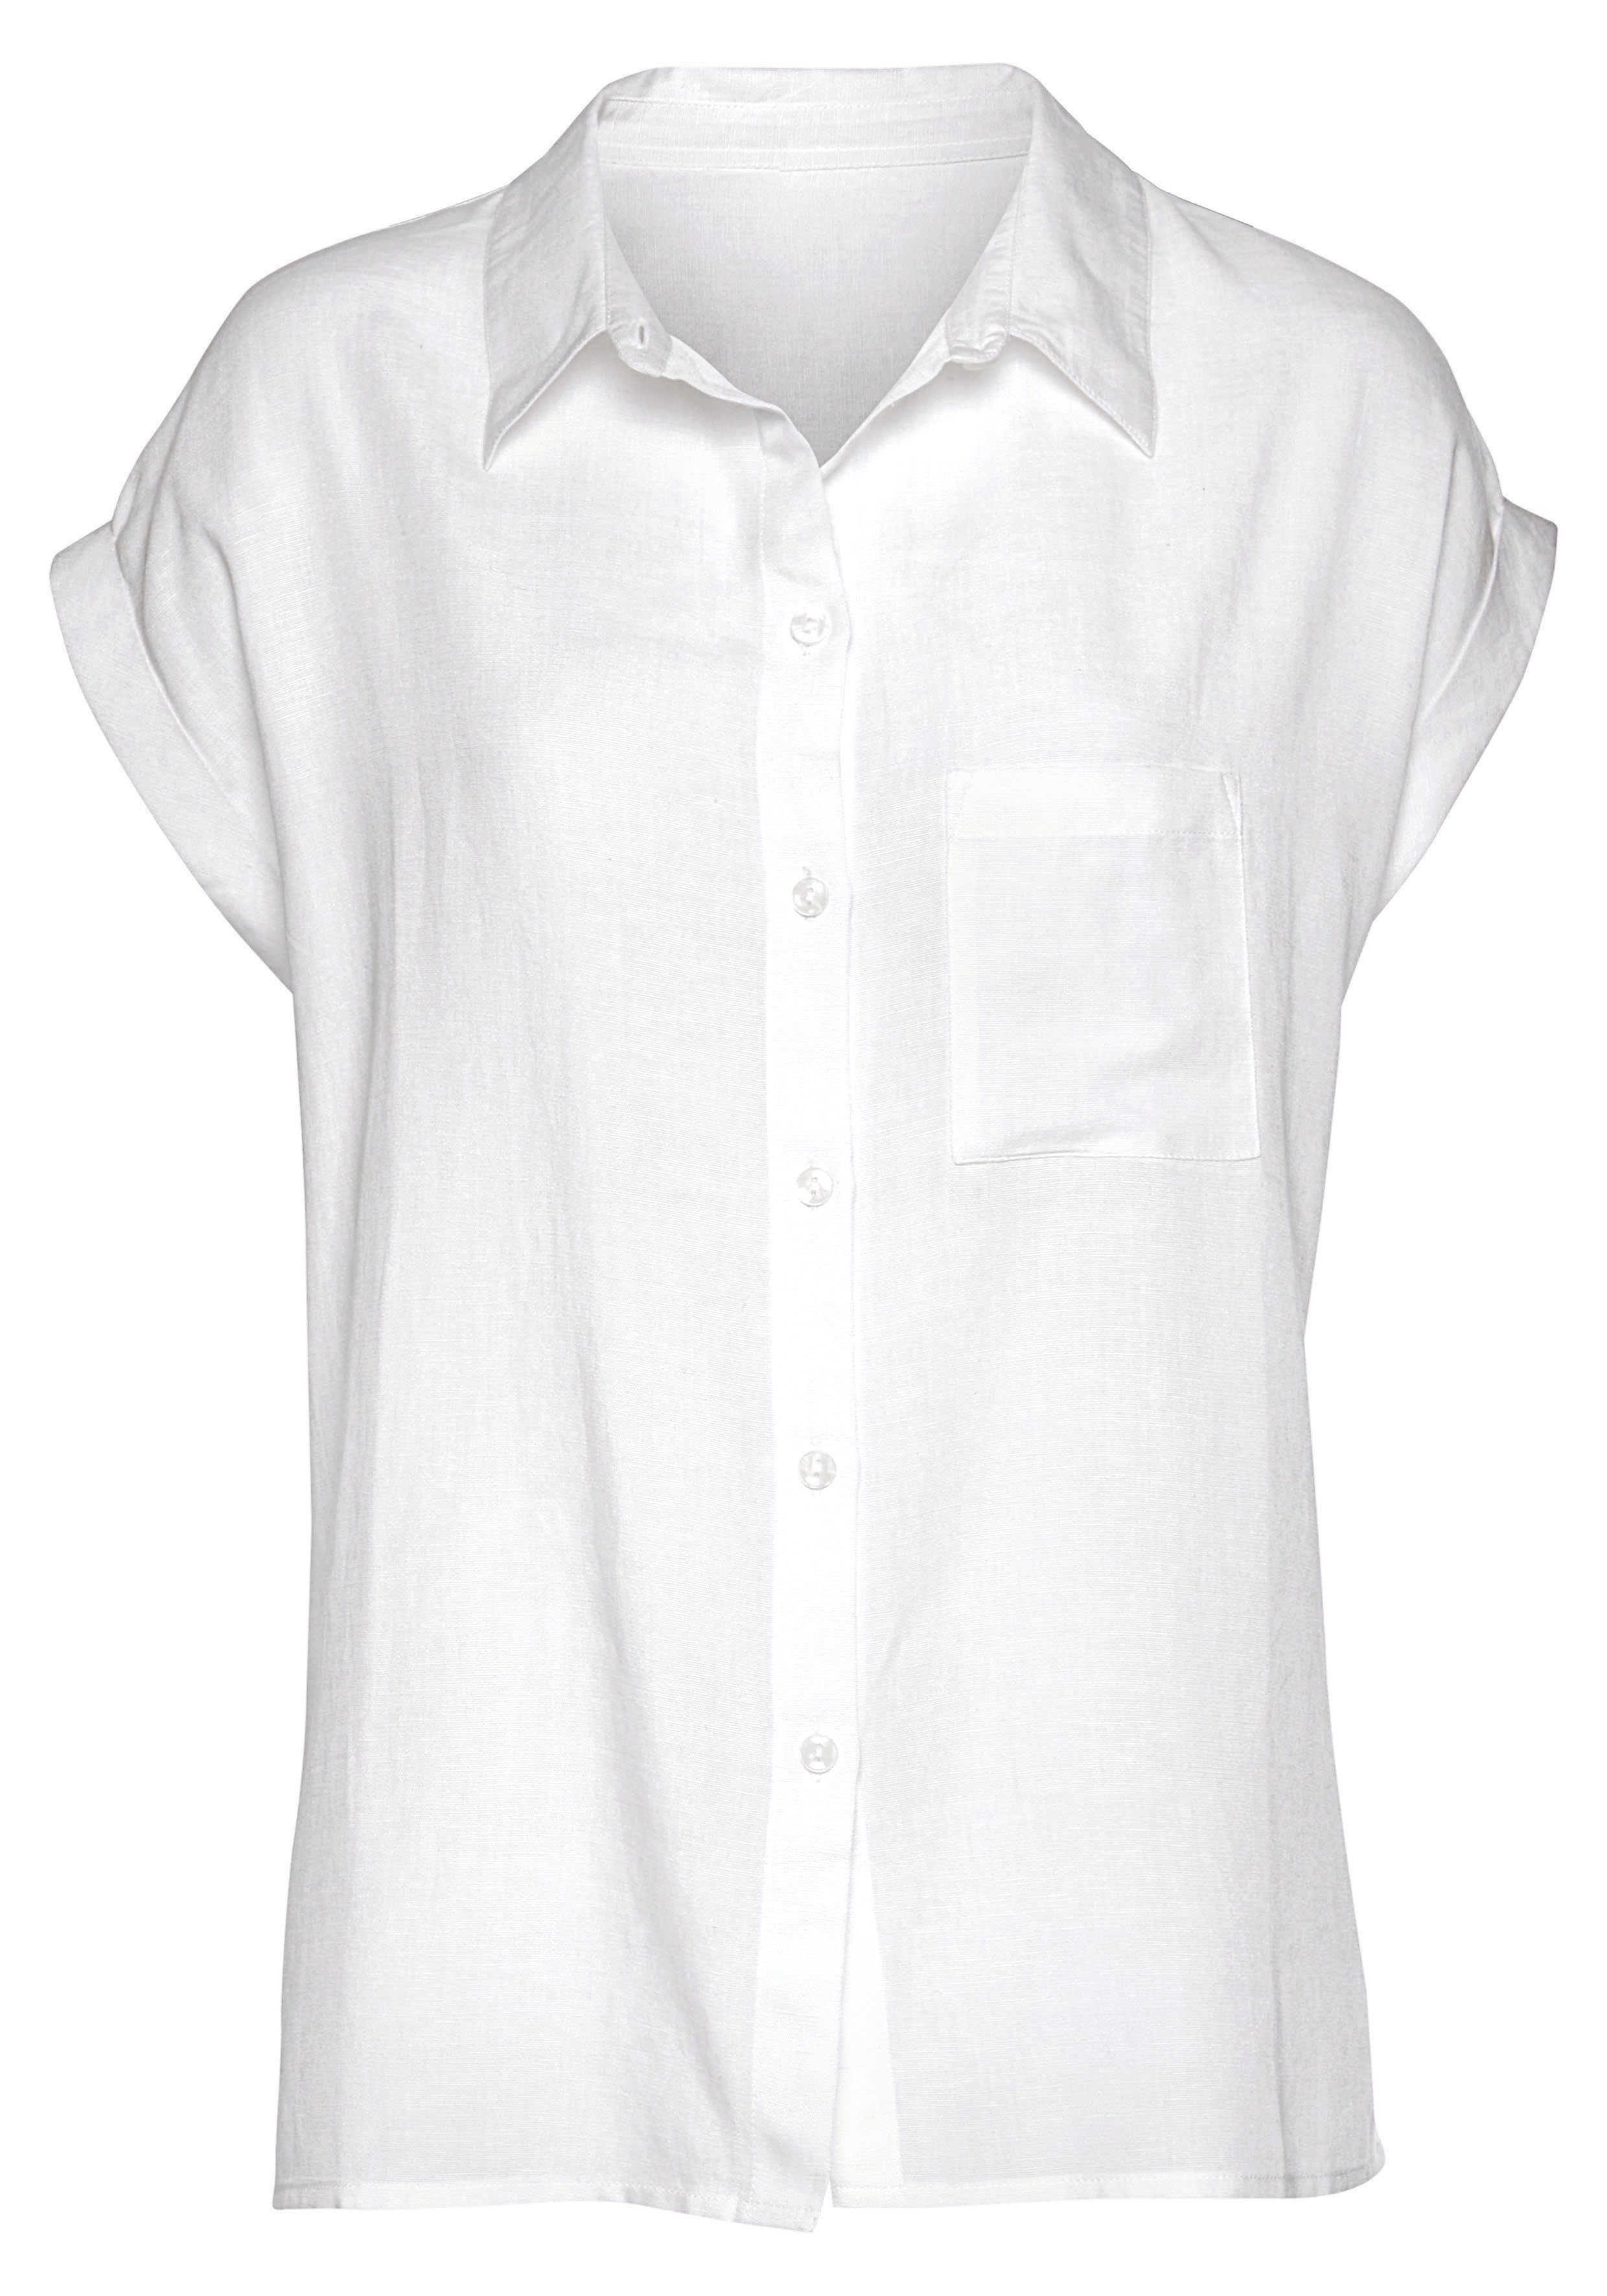 LASCANA Hemdbluse Knopfleiste, Leinenmix Leinenbluse, mit aus Kurzarmbluse weiß